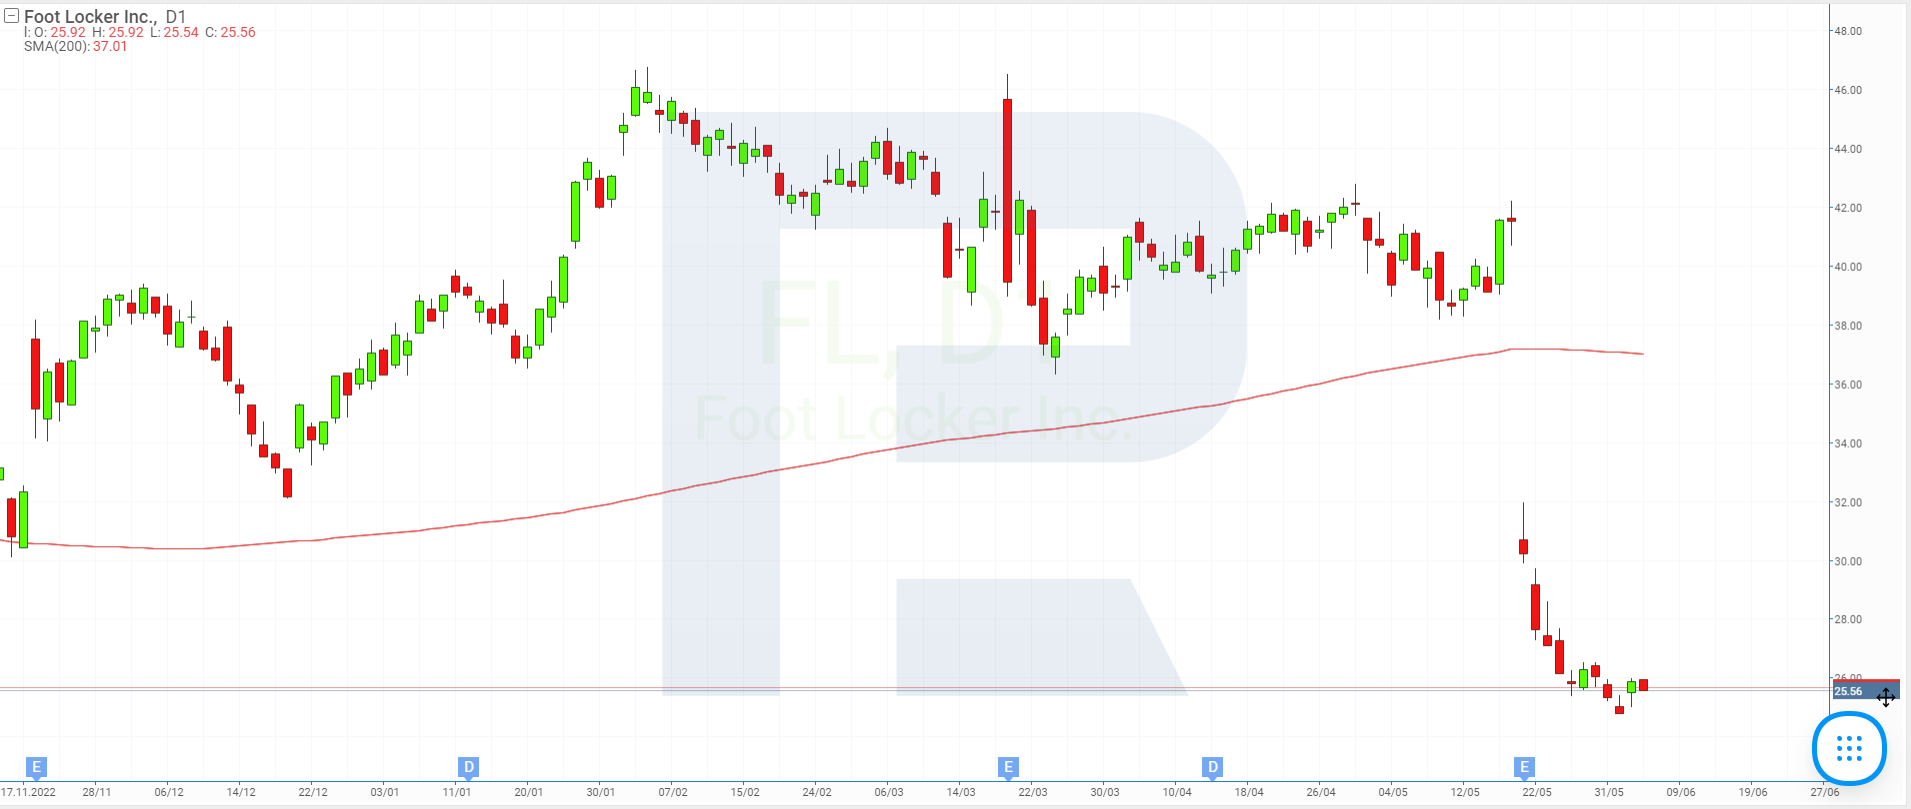 Stock price chart of Foot Locker Inc.